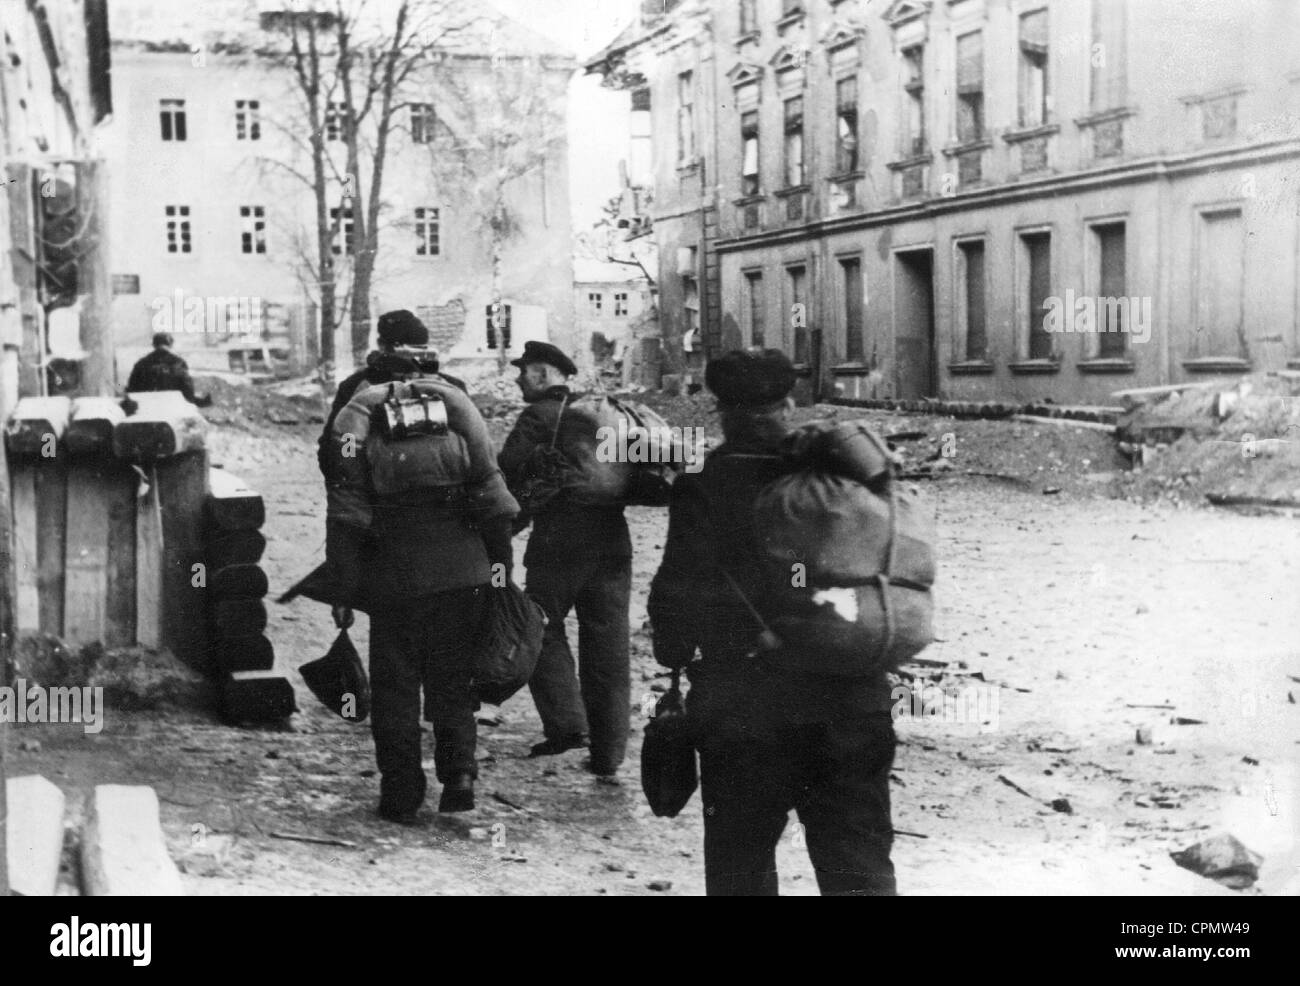 https://c8.alamy.com/comp/CPMW49/german-national-militia-in-silesia-1945-CPMW49.jpg